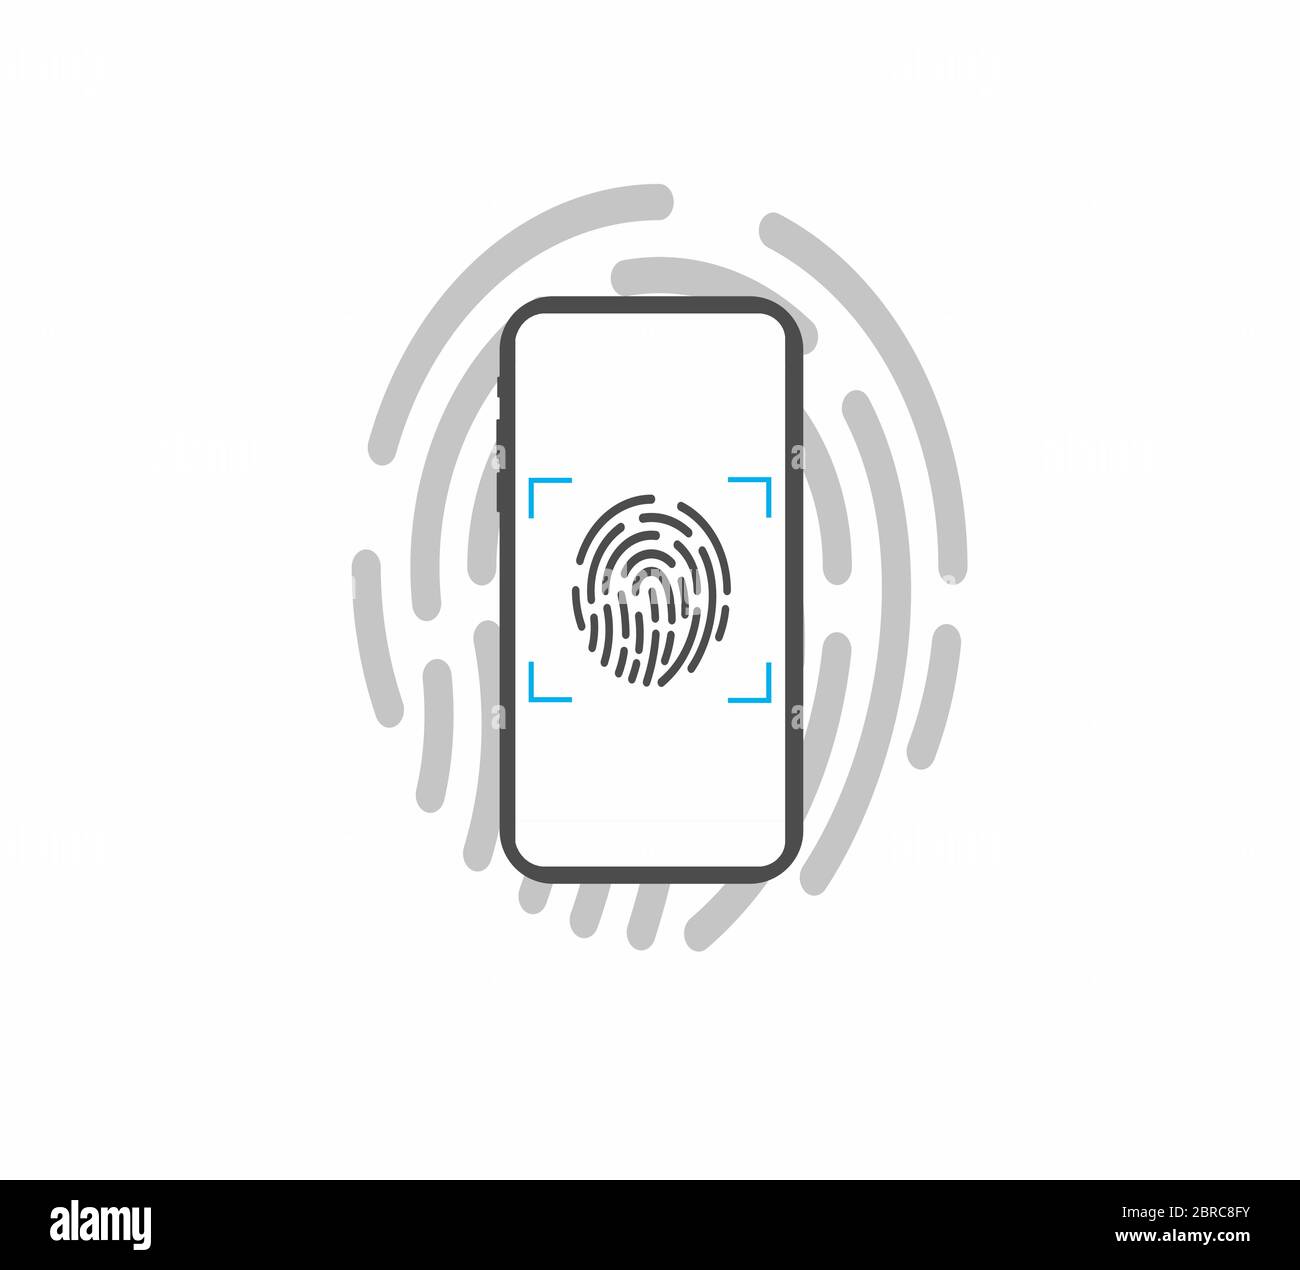 Data Security on Smartphone - Fingerprint Lock Vector Illustration Stock Vector